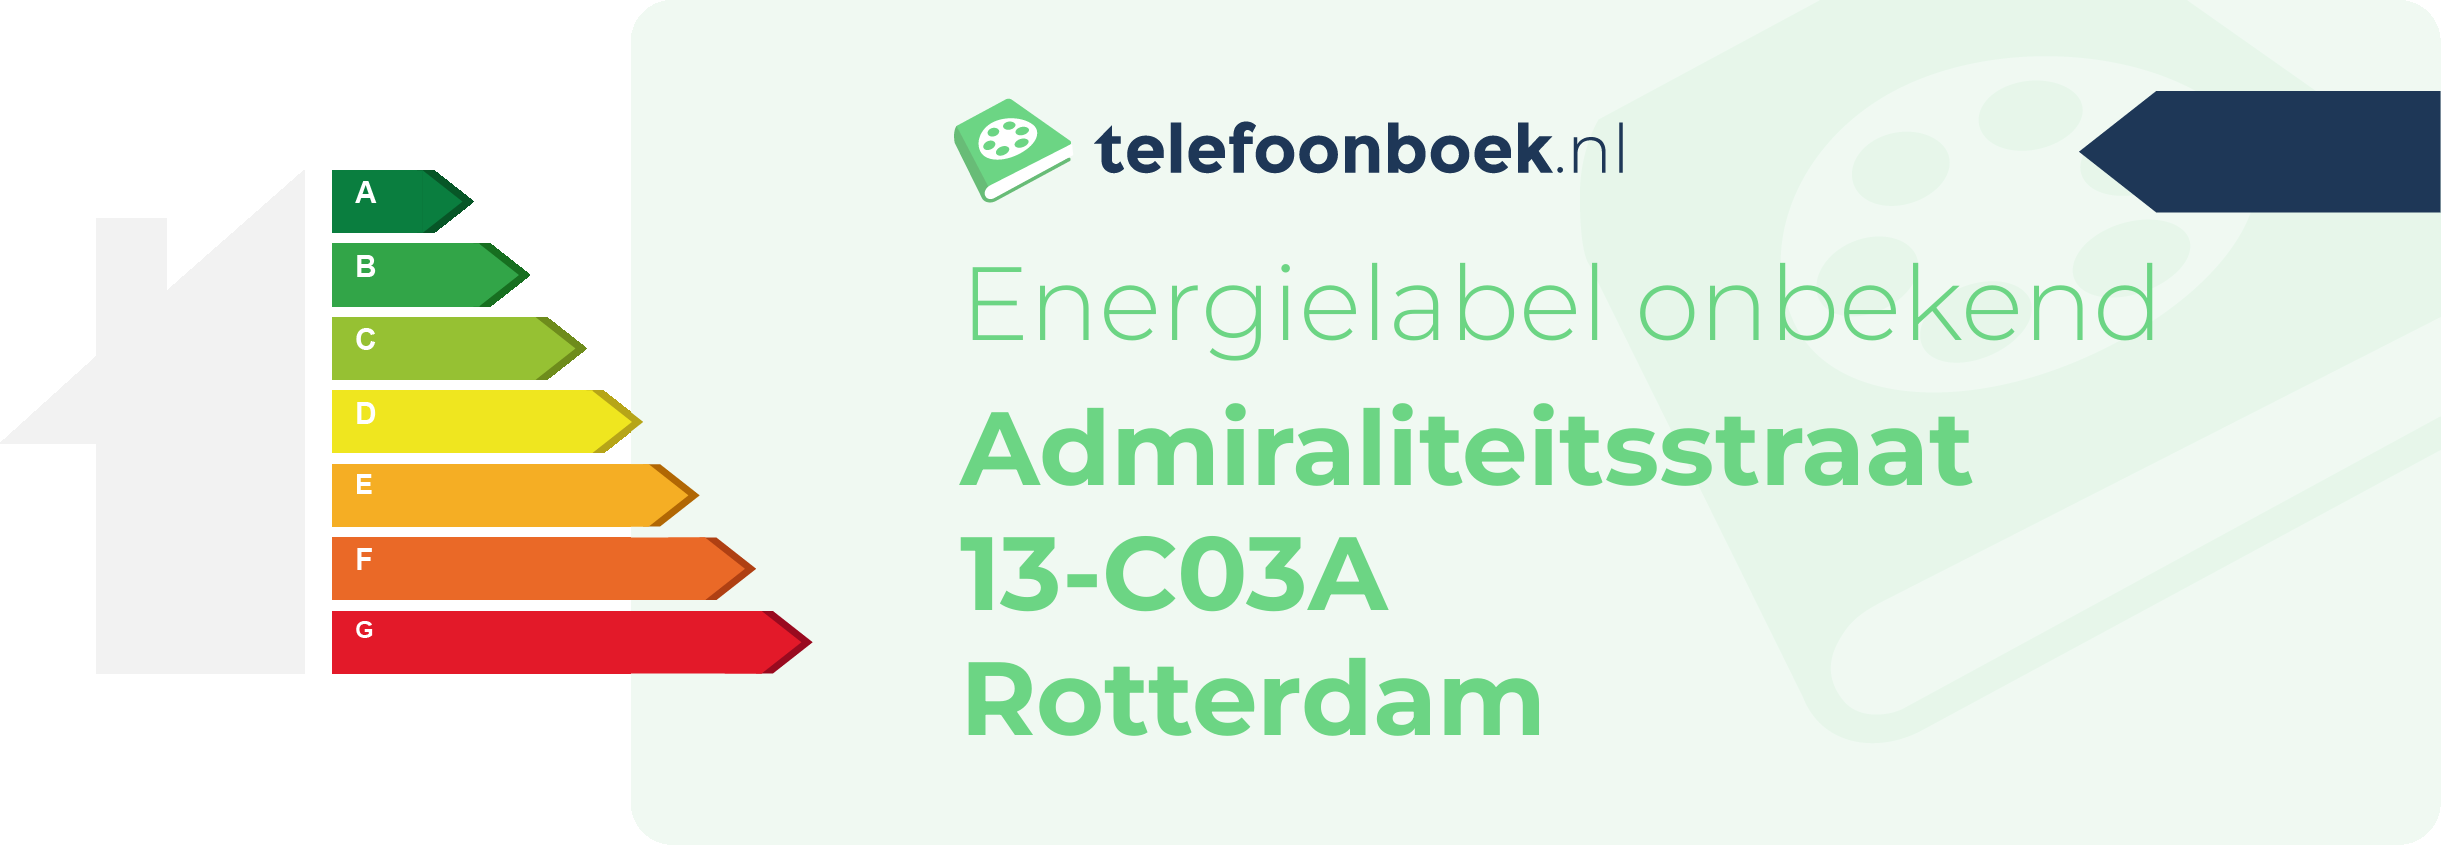 Energielabel Admiraliteitsstraat 13-C03A Rotterdam